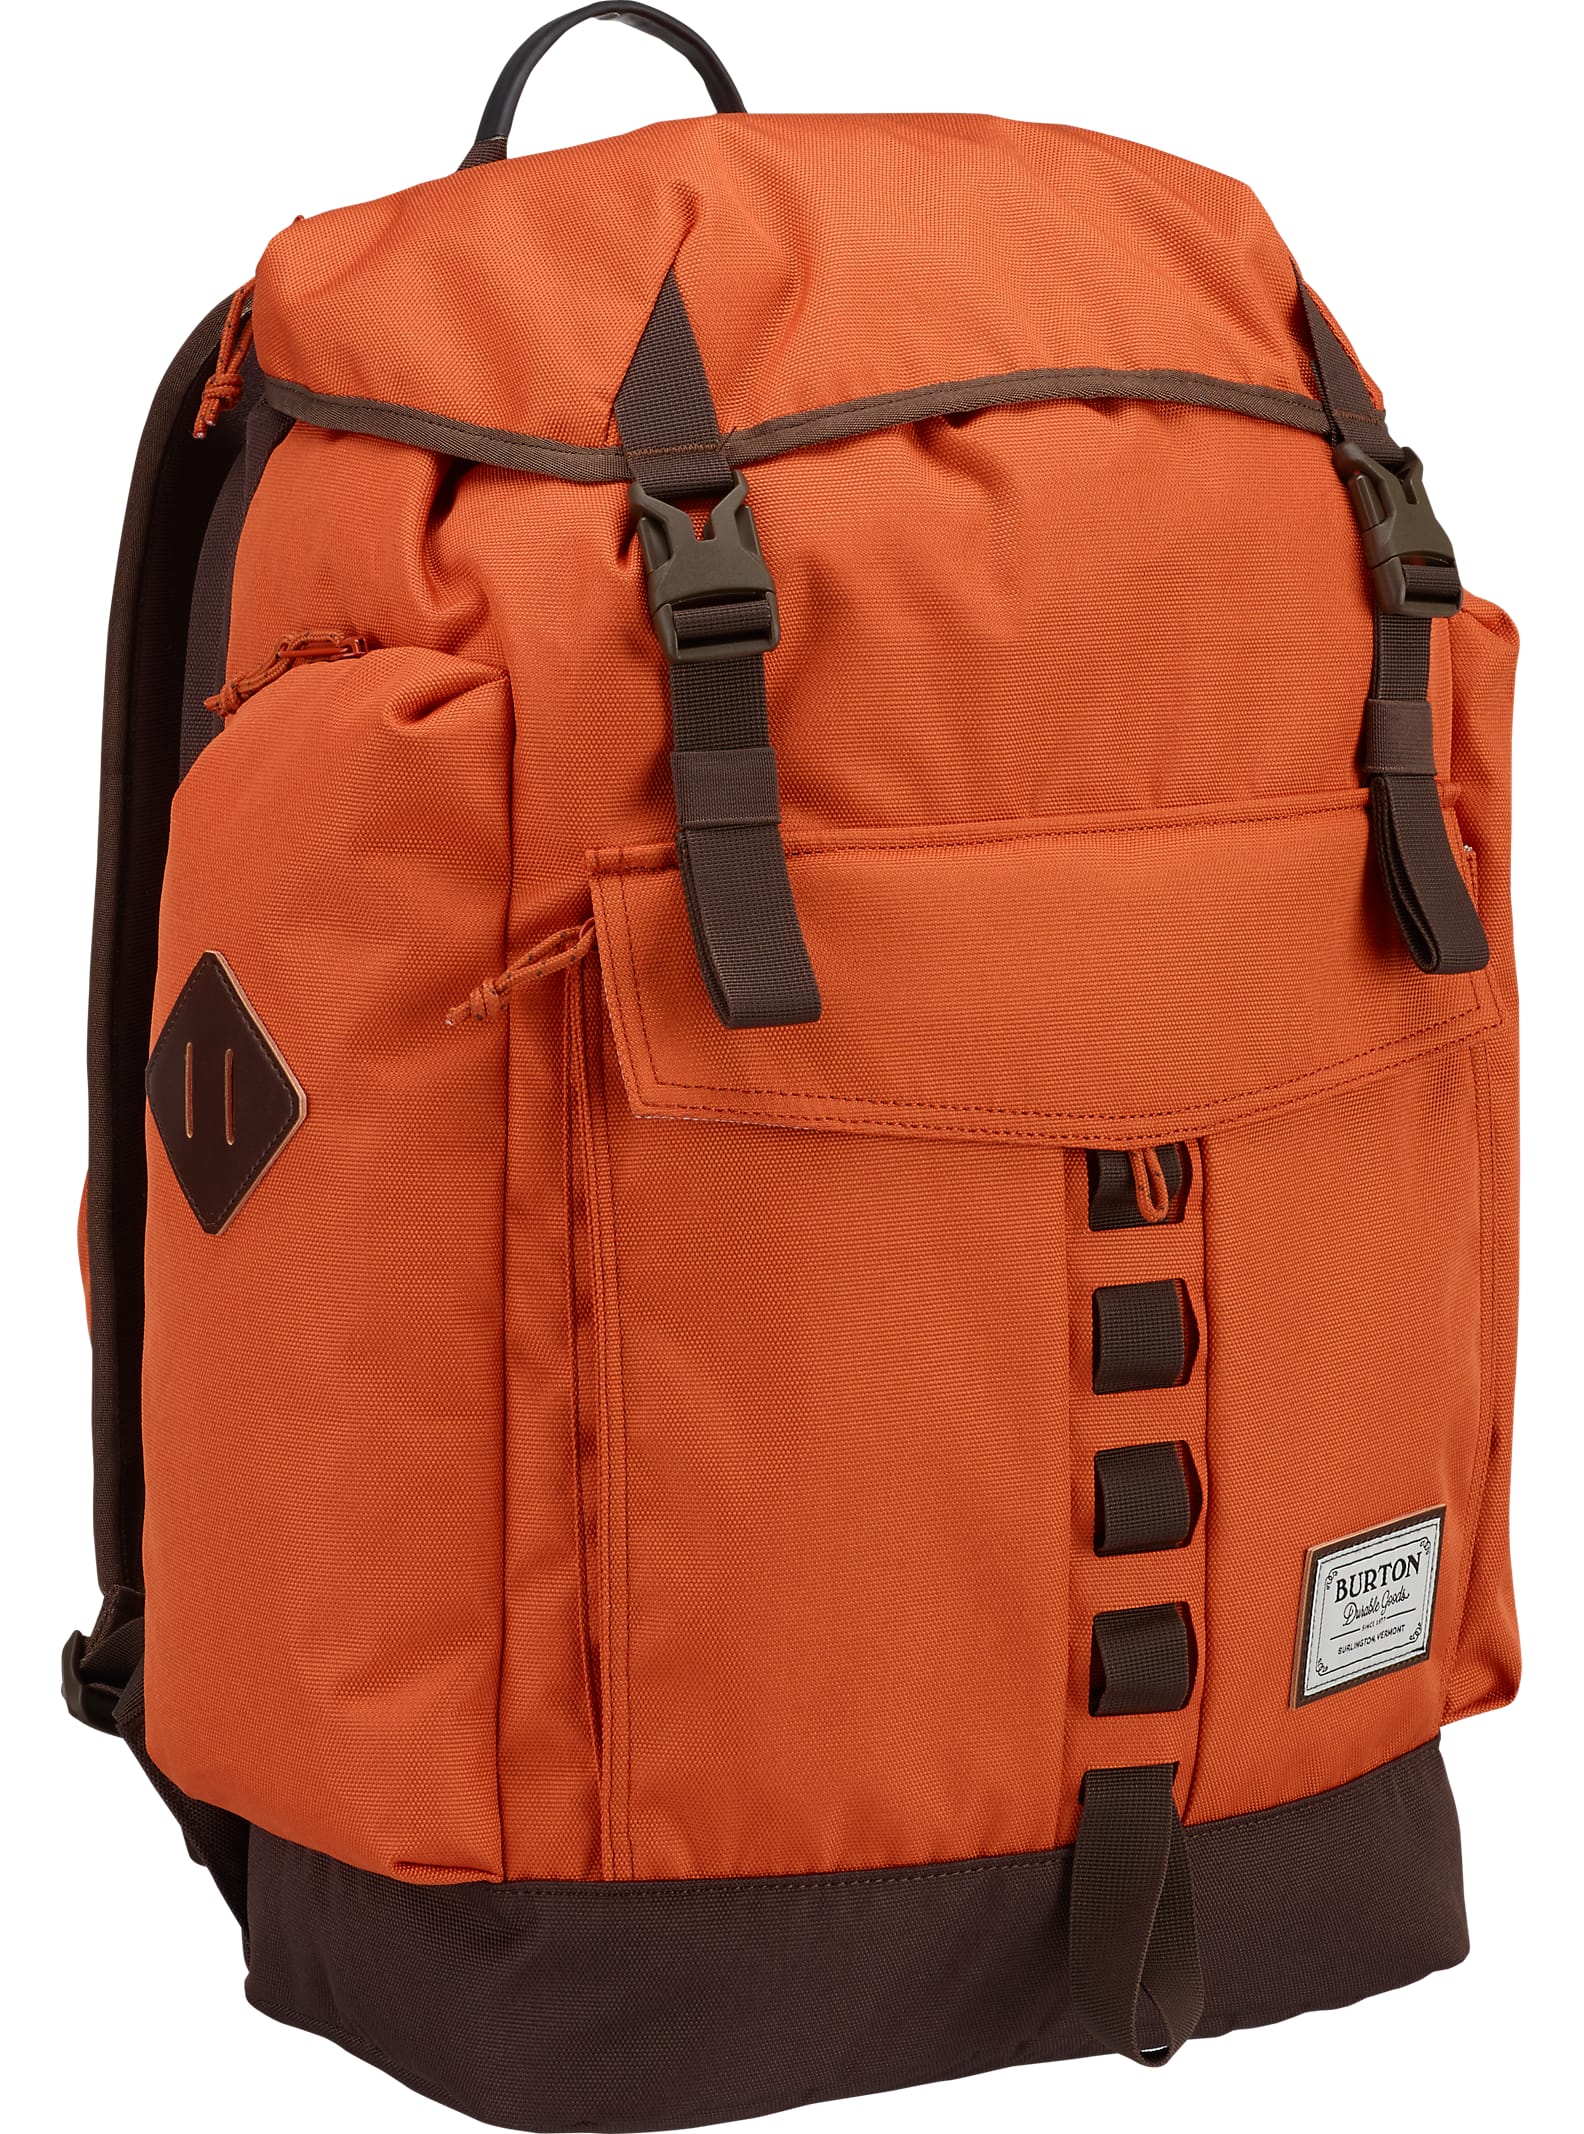 Burton / Fathom Backpack